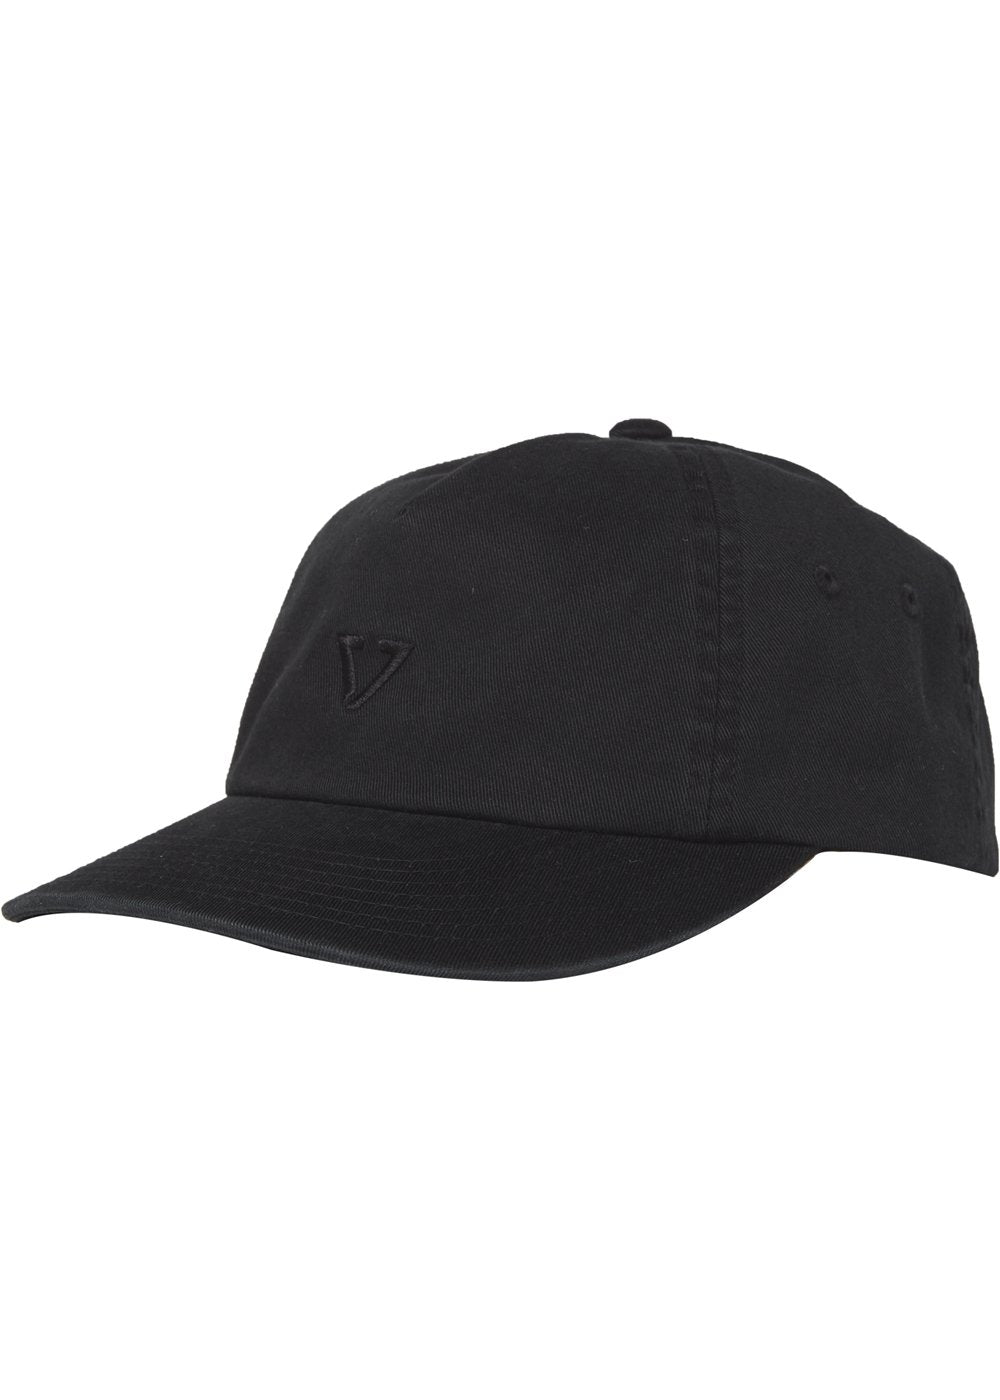 Vissla Yewview Hat (Phantom) - KS Boardriders Surf Shop